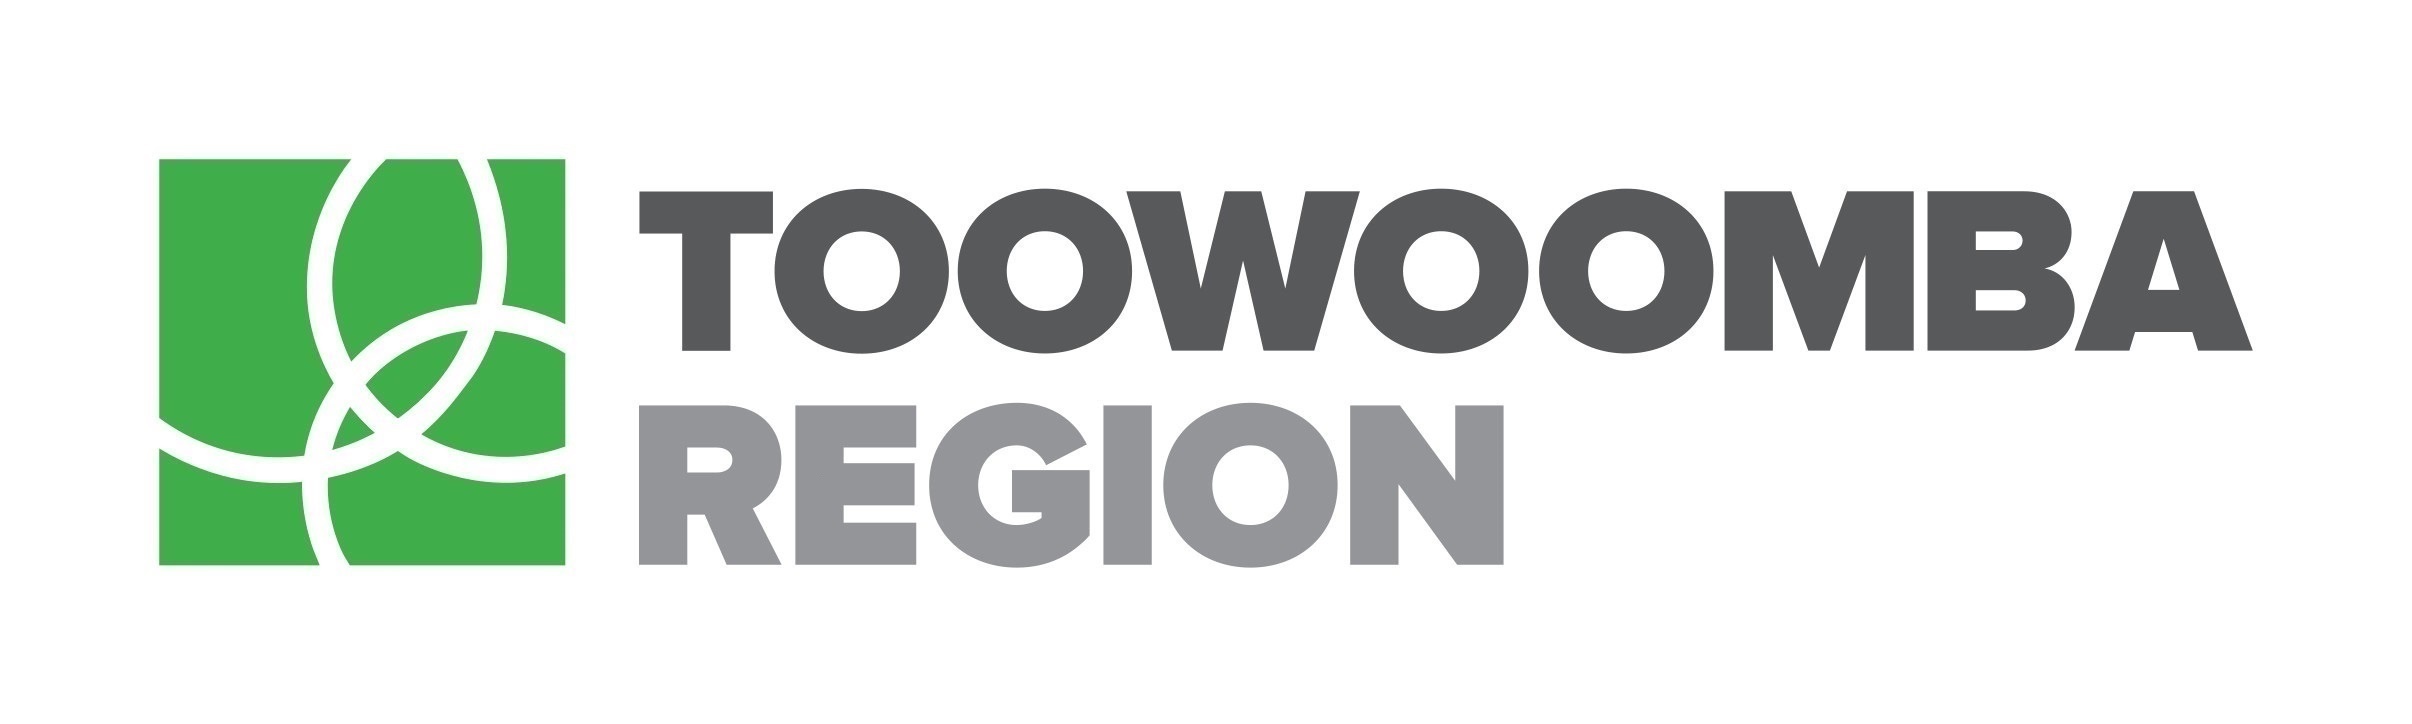 DOCS-8005485-v3-Landscape_Toowoomba_Region_logo_colour.jpg